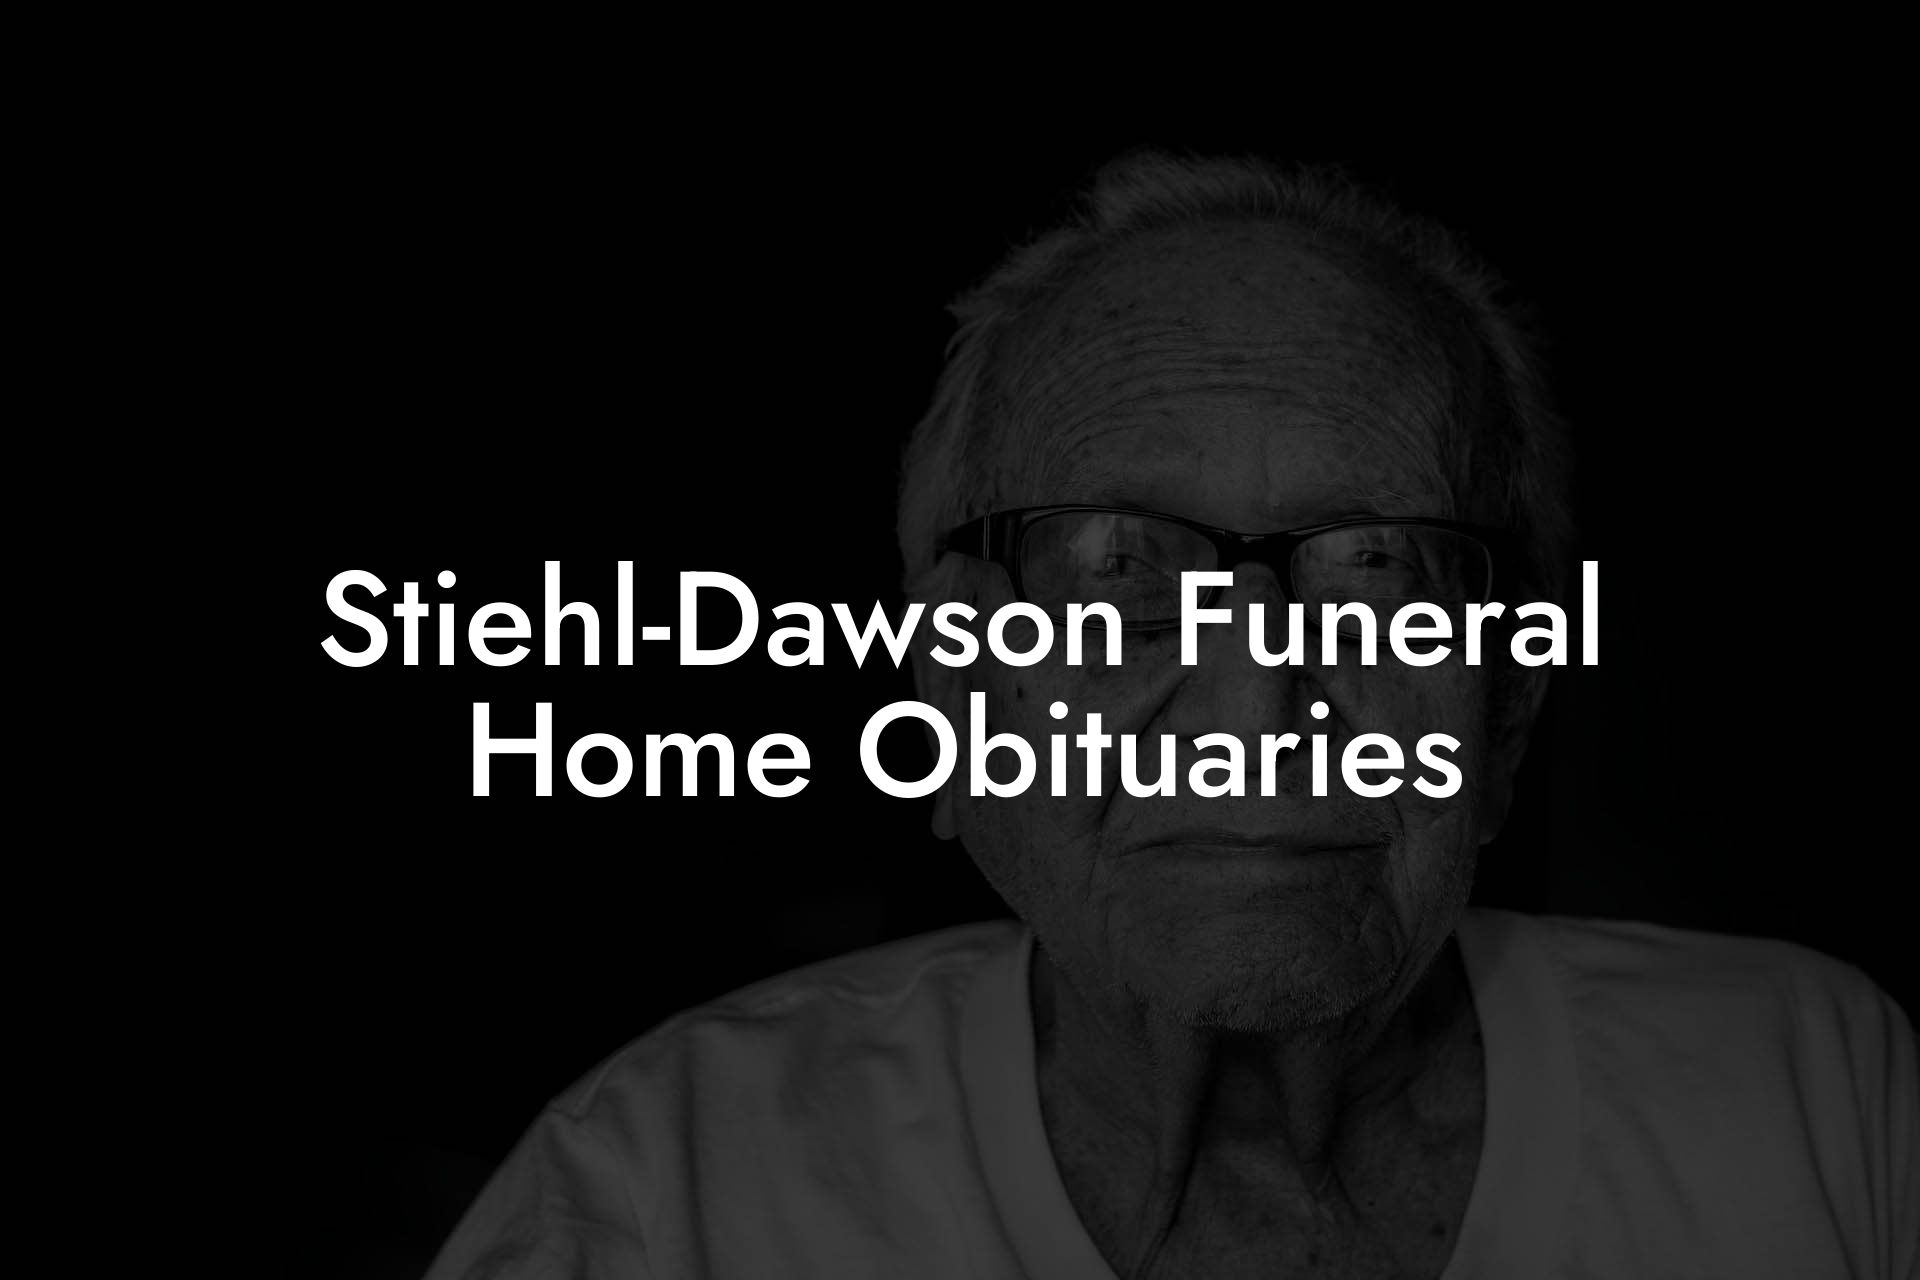 Stiehl-Dawson Funeral Home Obituaries